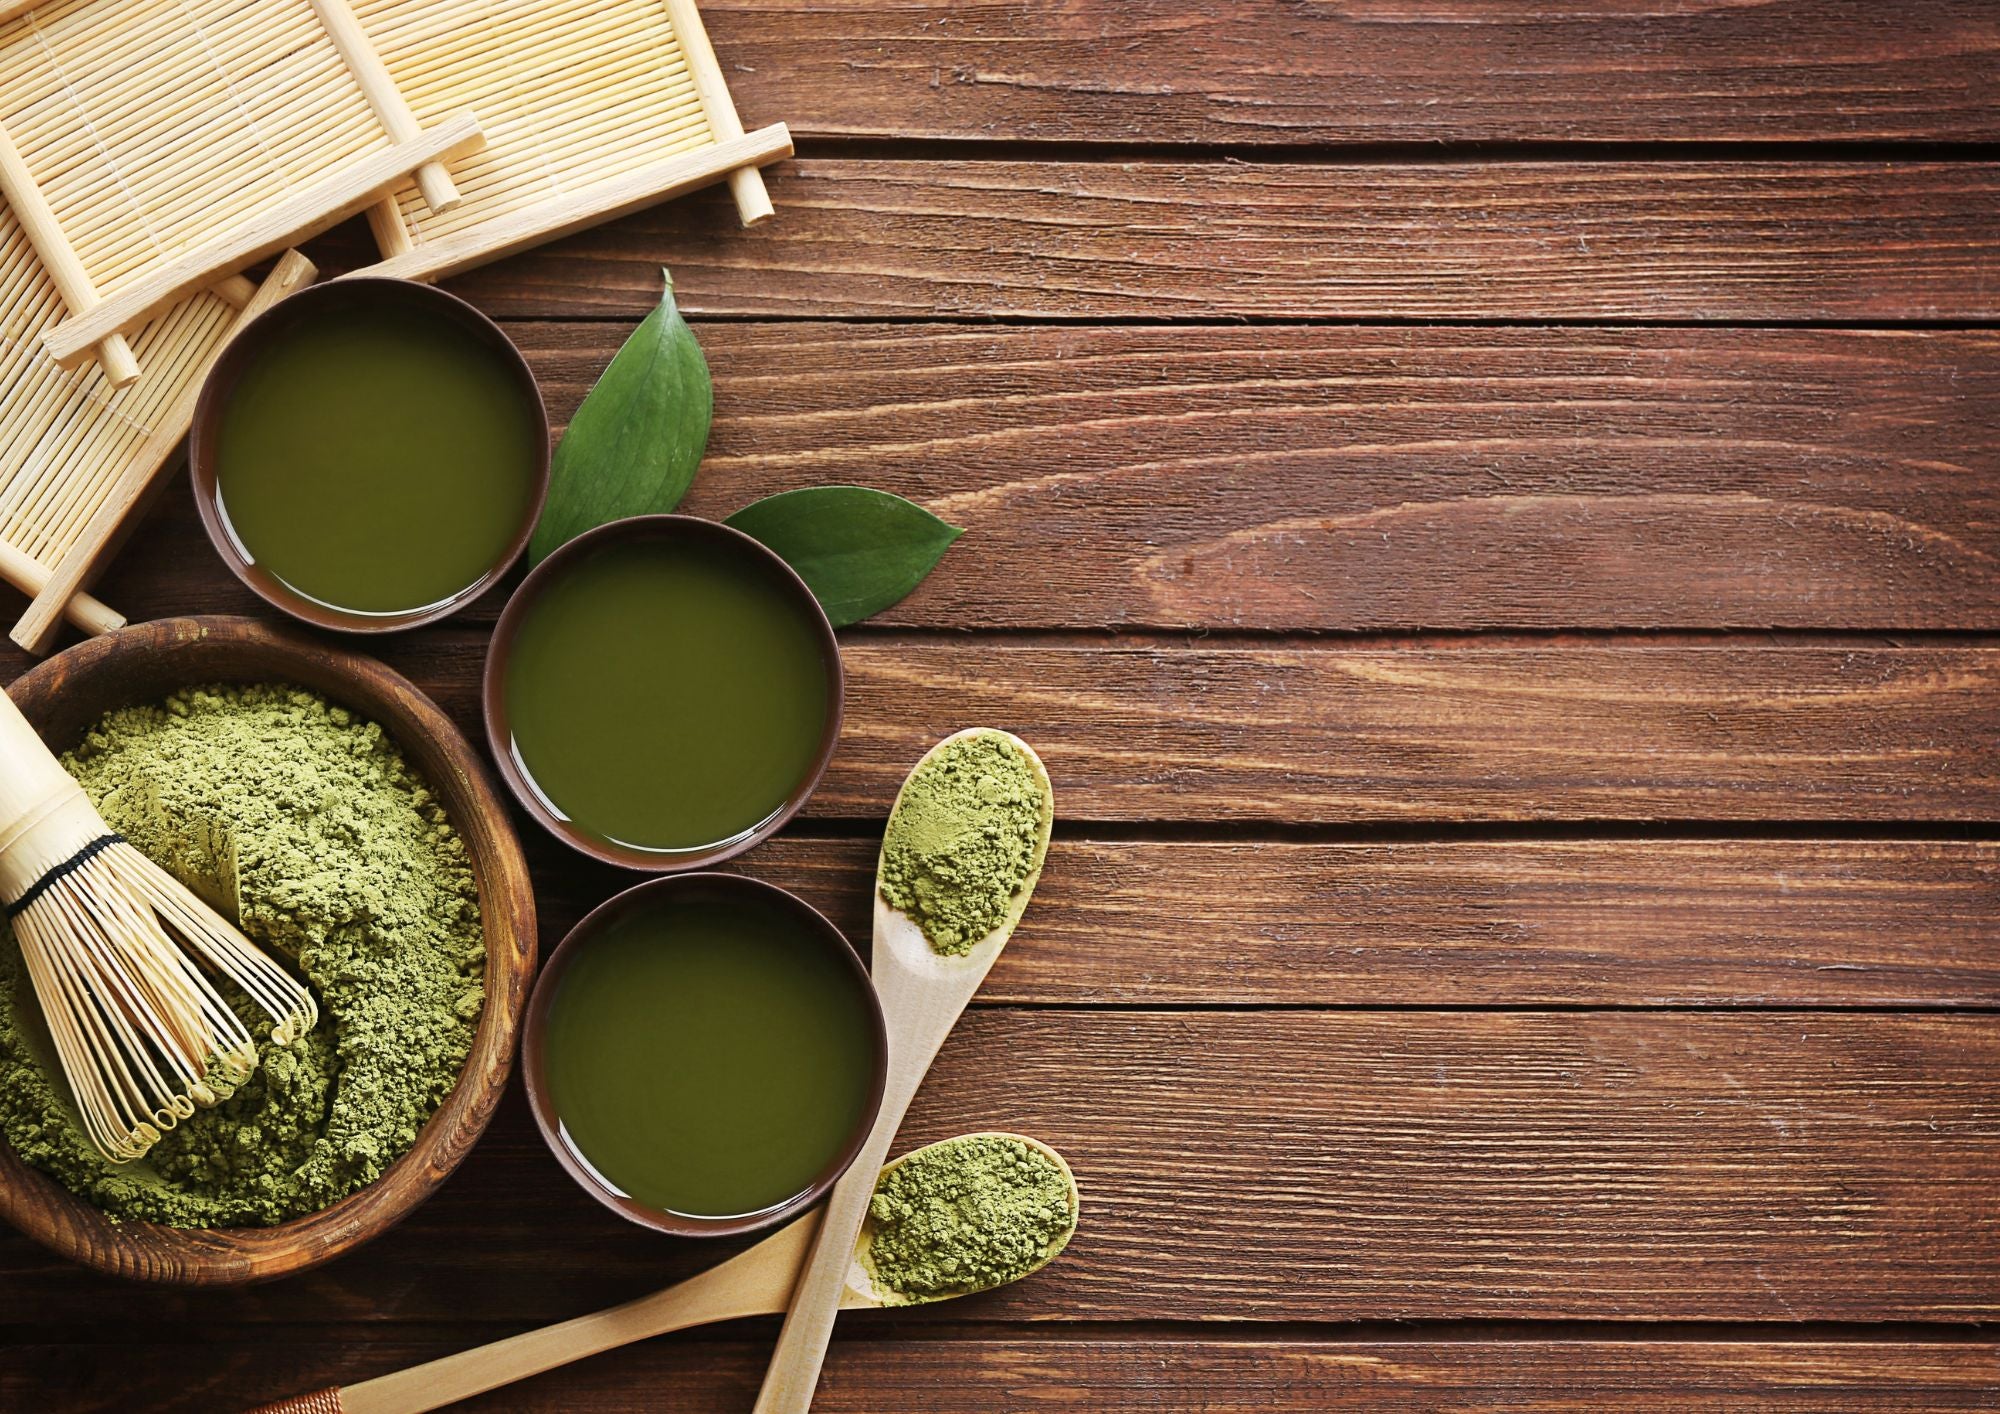 Japanese Matcha Green Tea Wholesale - United States